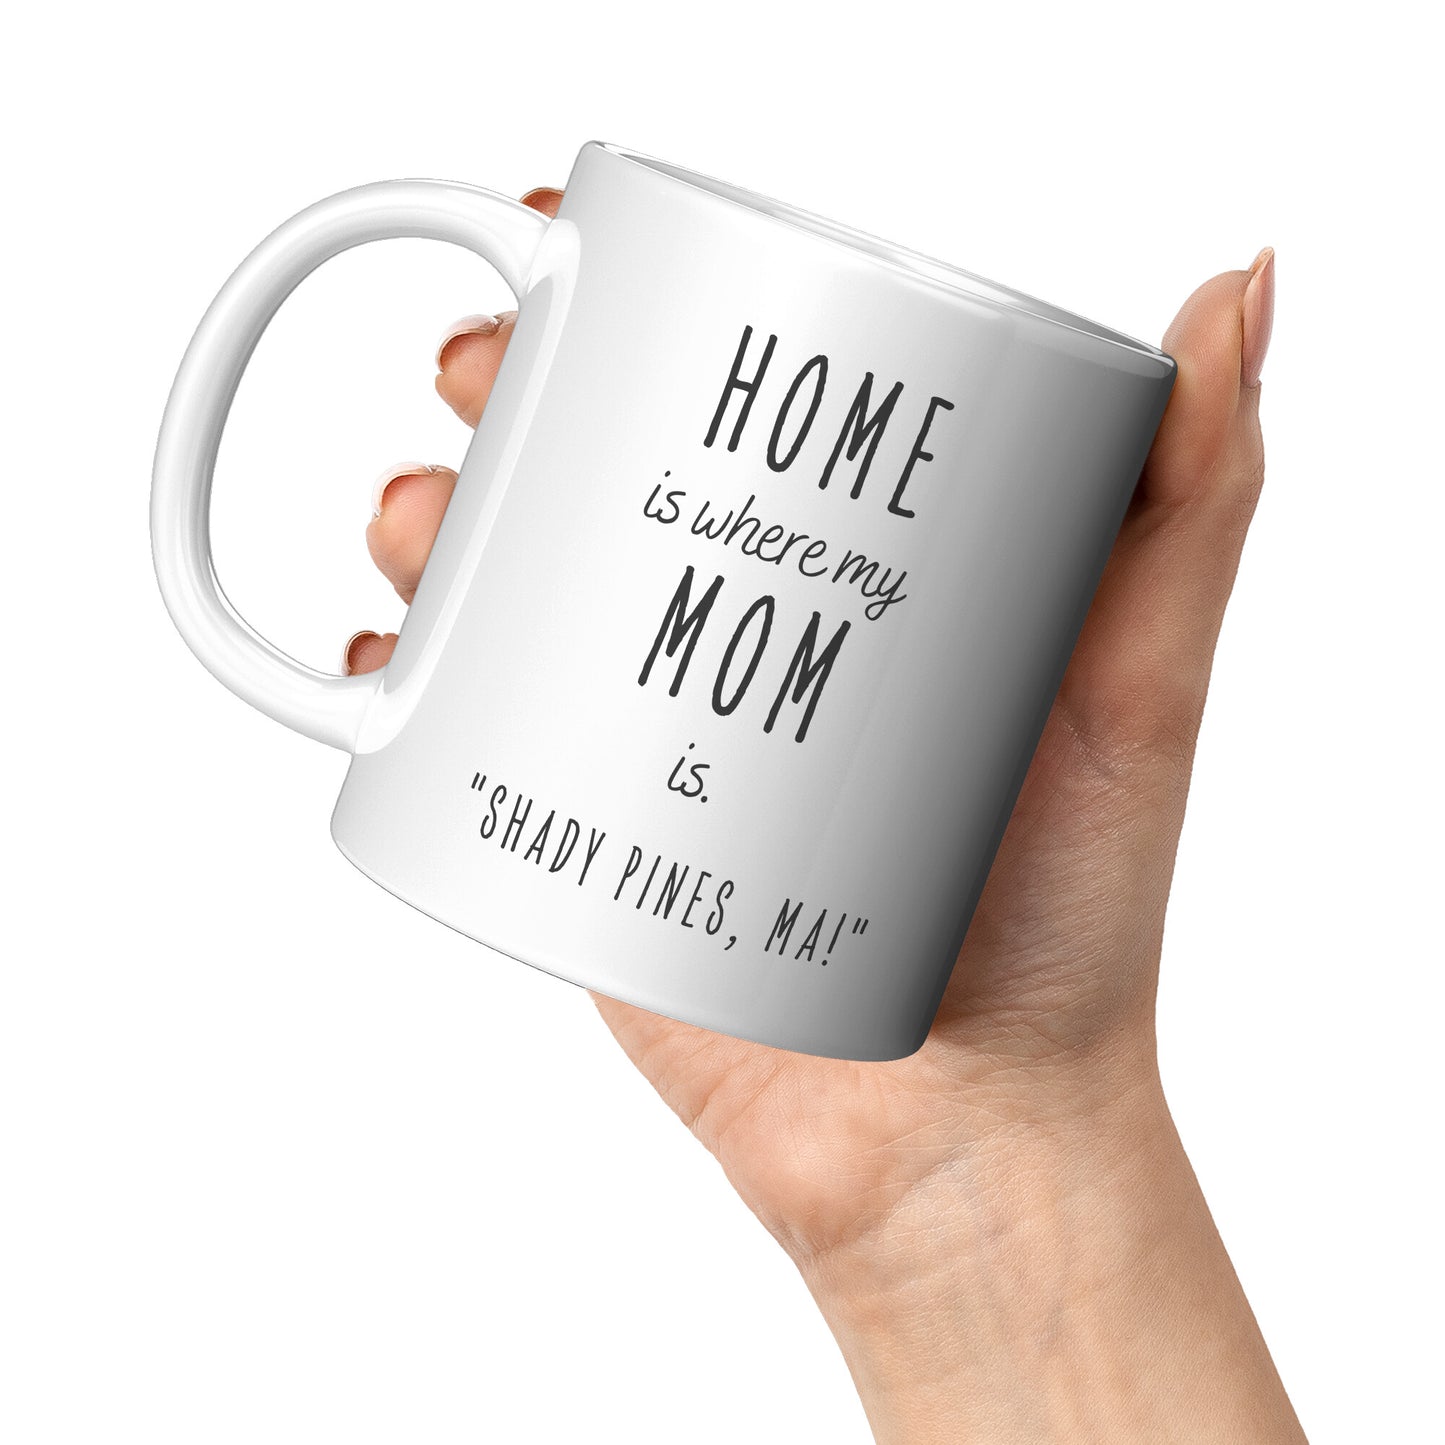 Home Is Where My Mom Is, Shady Pines, Ma! 11oz White Mug